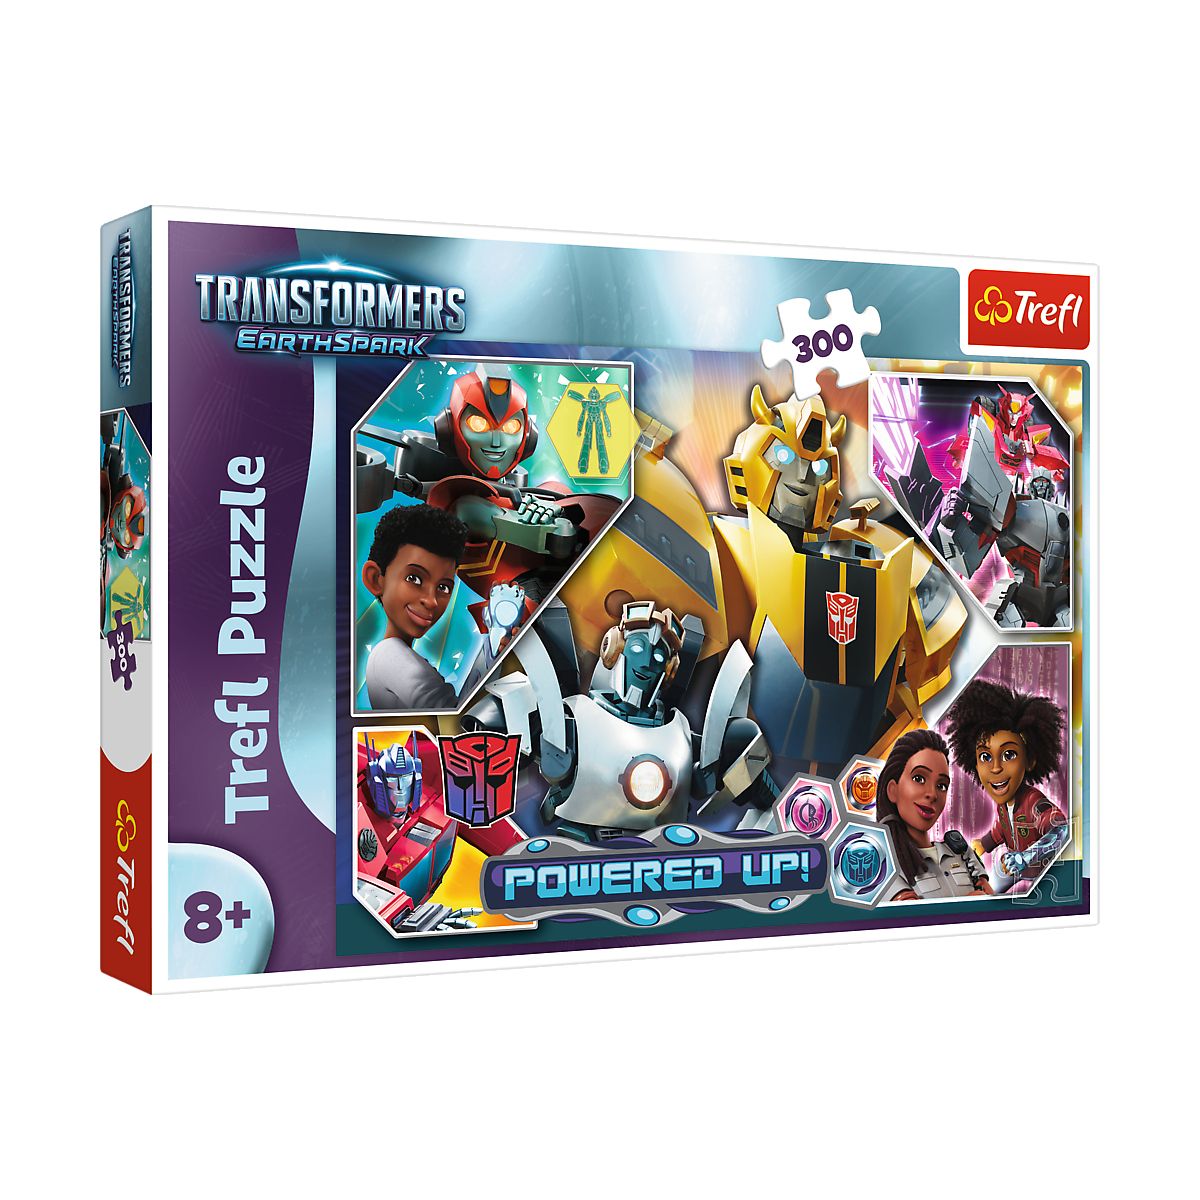 Puzzle Trefl Transformers 300 el. (23024)